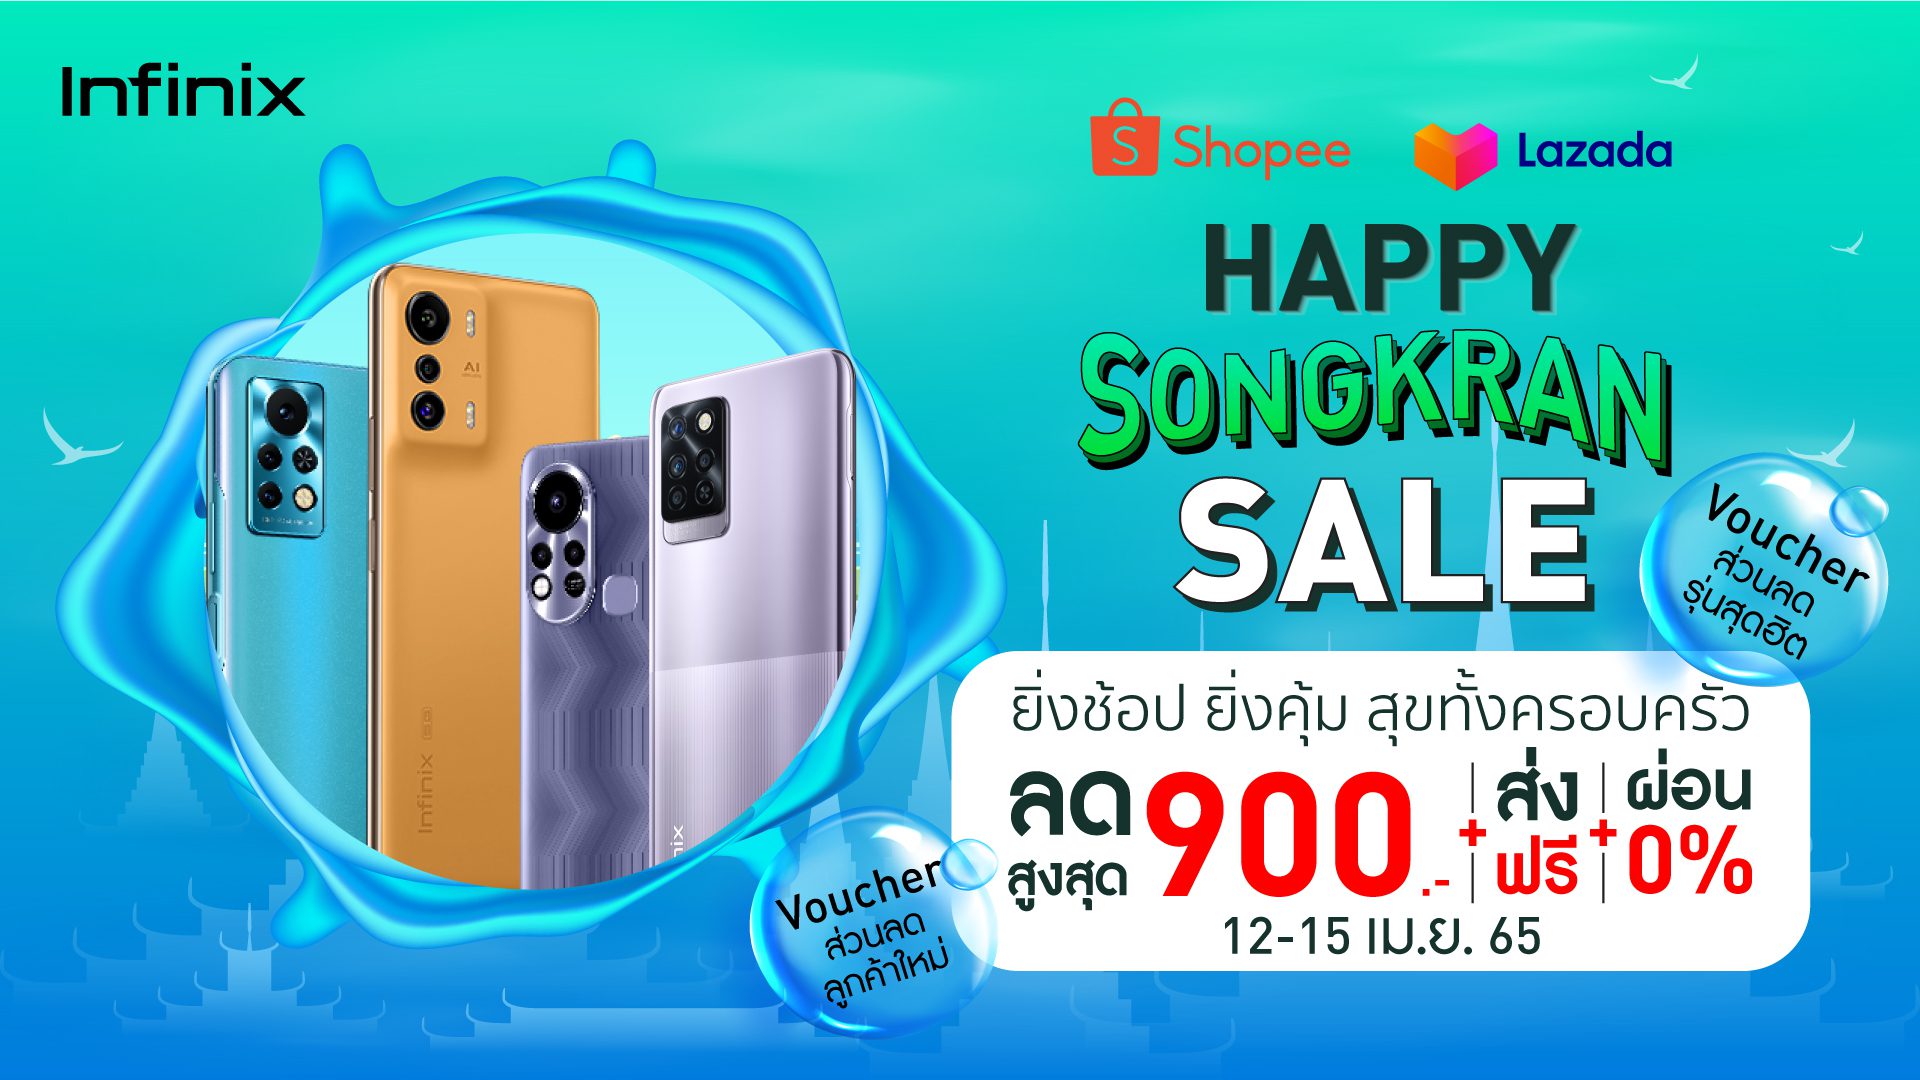 Infinix ส่งโปรแรงสุขทั้งครอบครัวกับ Happy Songkran Sale ยิ่งช้อป ยิ่งคุ้ม ลดสูงสุด 900 บาท 12 – 15 เมษายนนี้